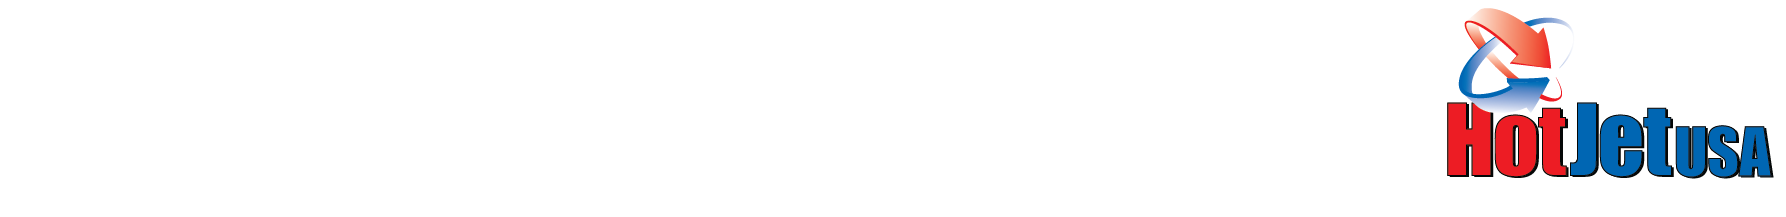 18 Gallon per Minute 4000 PSI Trailer Jetters by HotJet USA